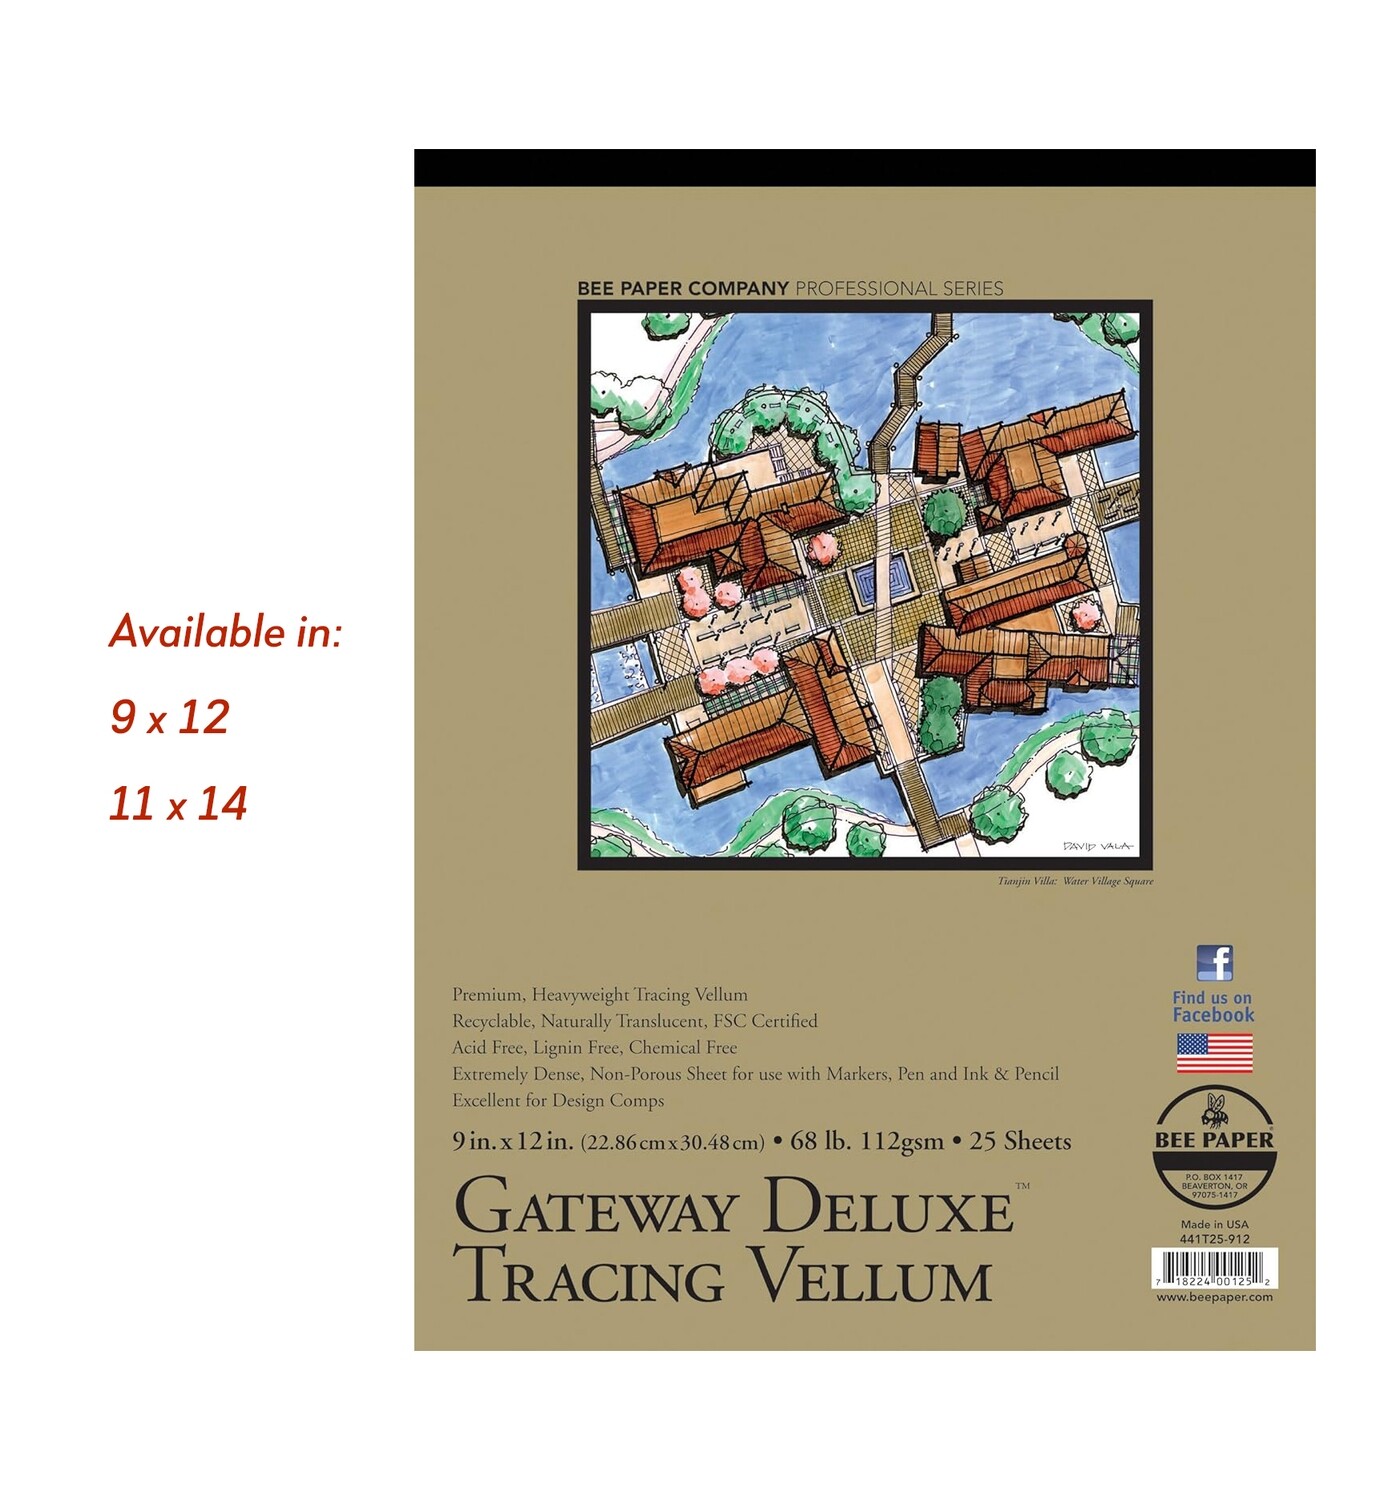 Bee Paper Gateway Deluxe Tracing Vellum